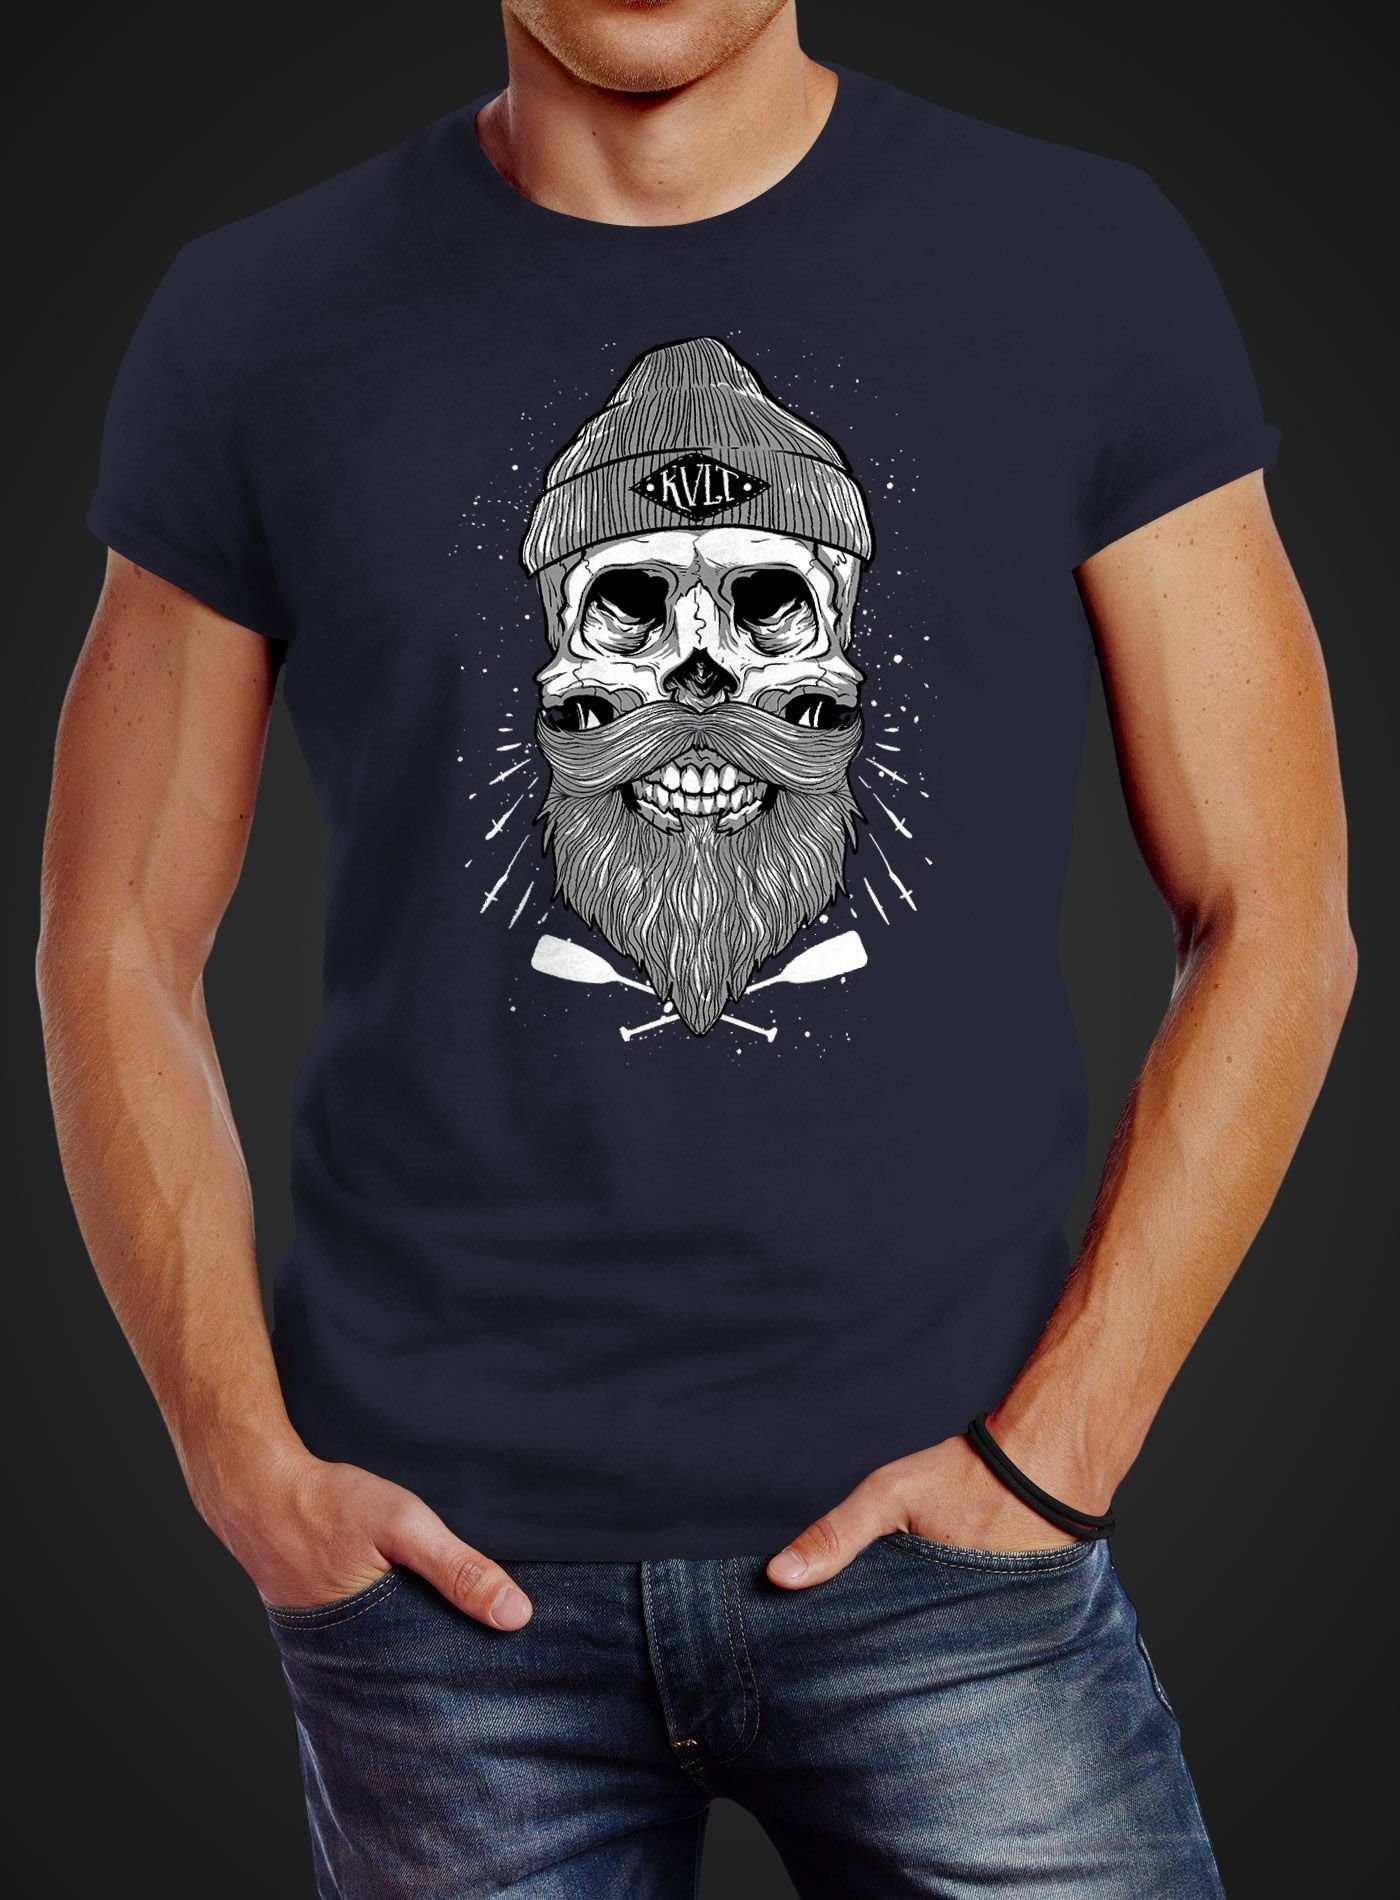 Bart mit Print Print-Shirt Beard Fit navy Neverless® Herren Slim Kapitän Skull Captain T-Shirt Neverless Totenkopf